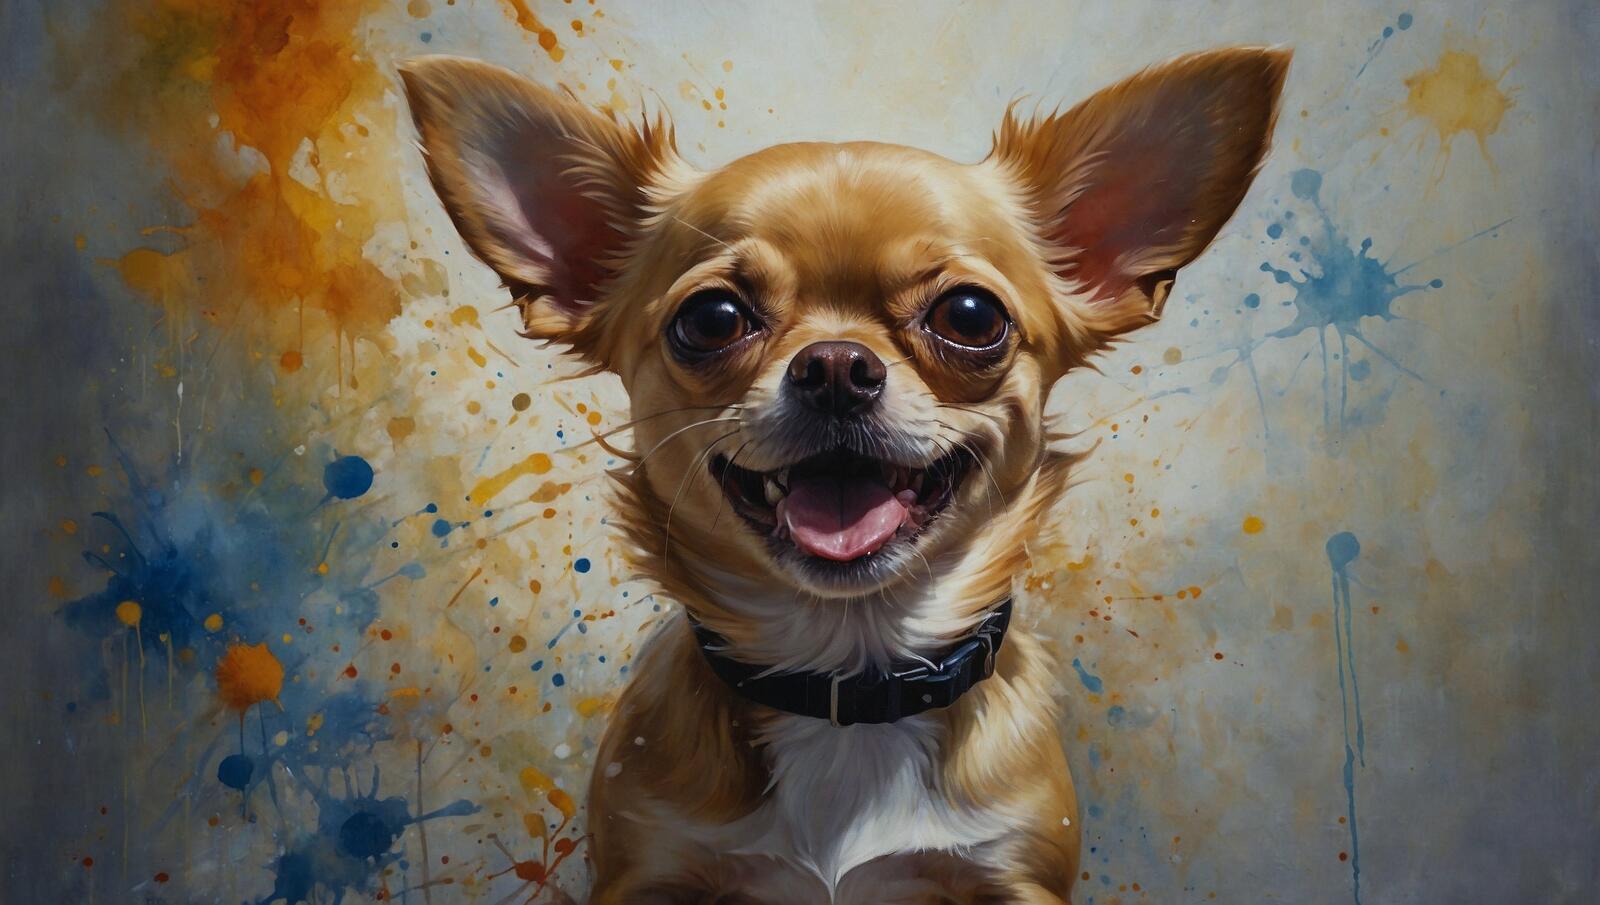 Бесплатное фото Собака со сложенными ушами